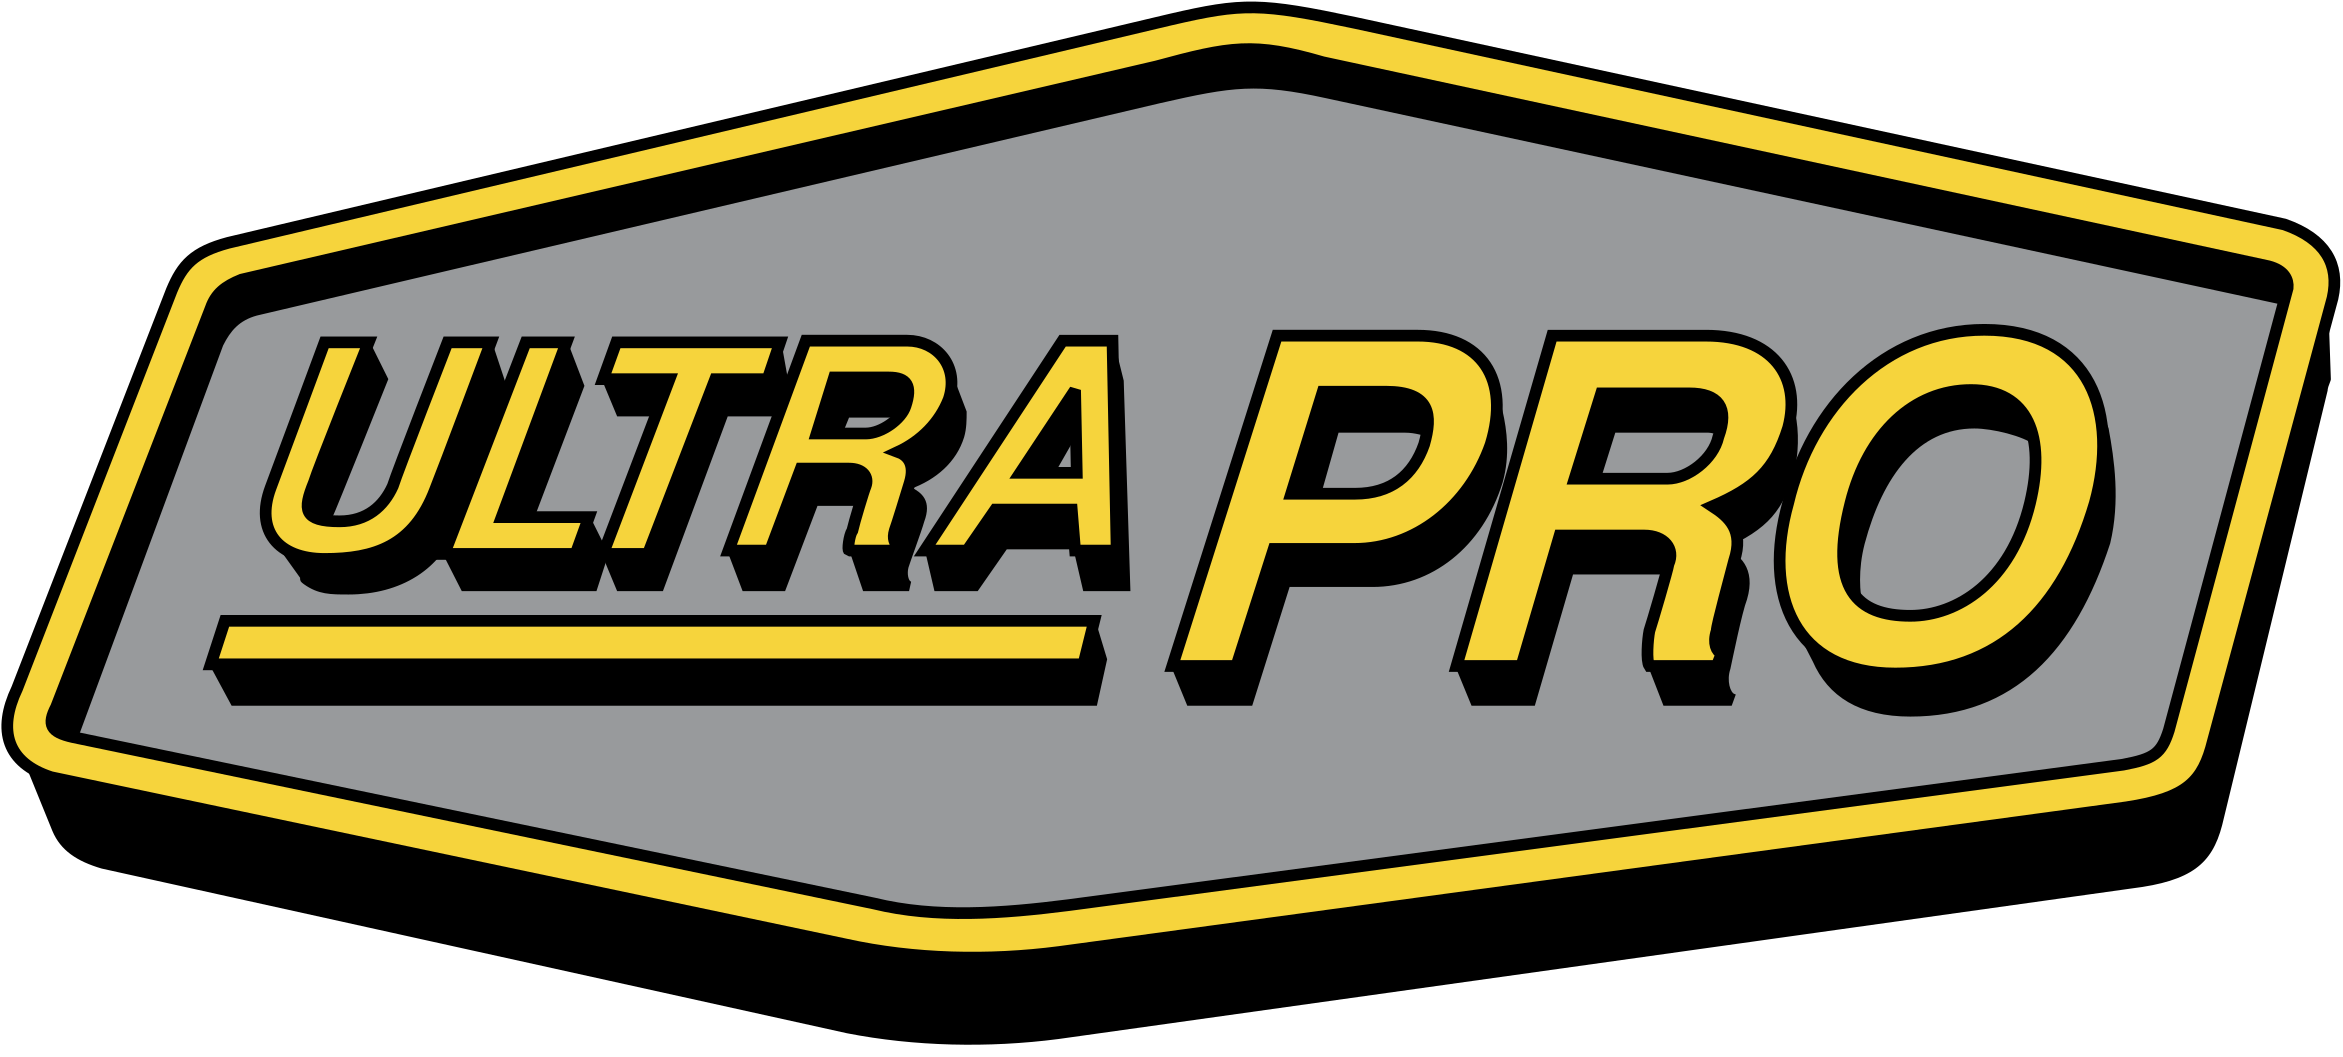 Ultra Pro Logo Png Transparent - Ultra Pro (2400x2400), Png Download